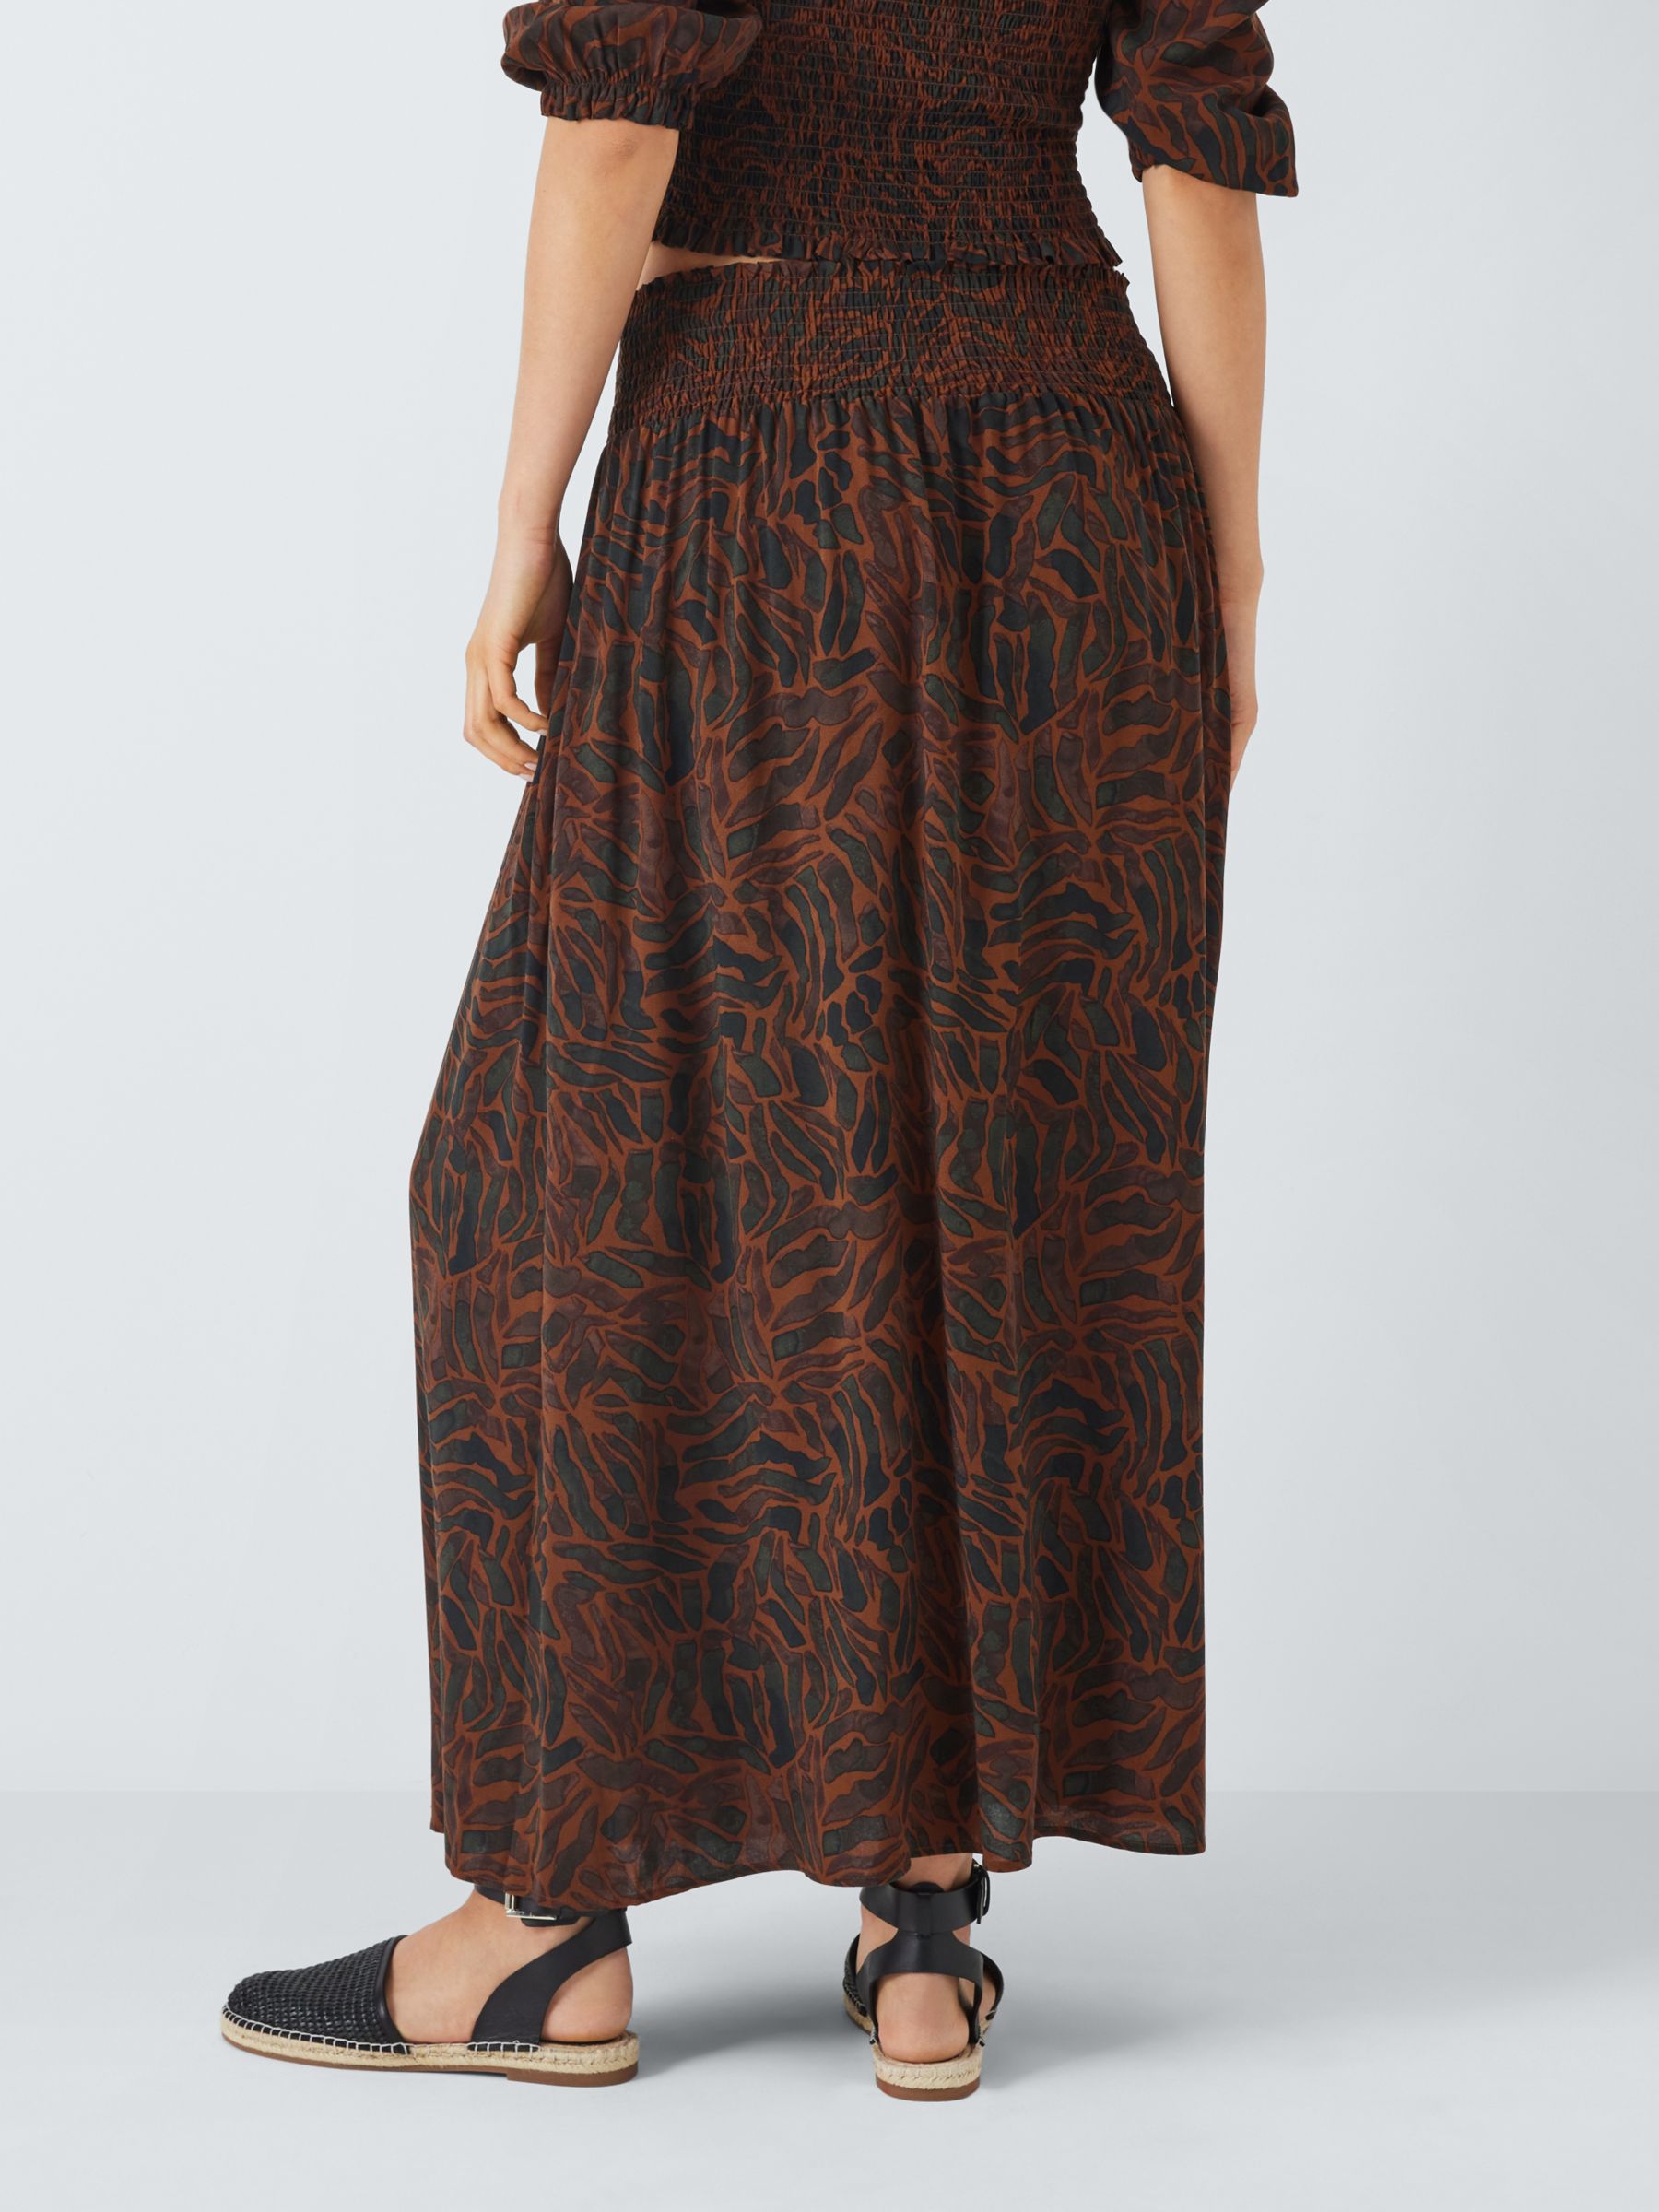 John Lewis ANYDAY Solare Shirred Waist Maxi Skirt, Brown/Multi, 14